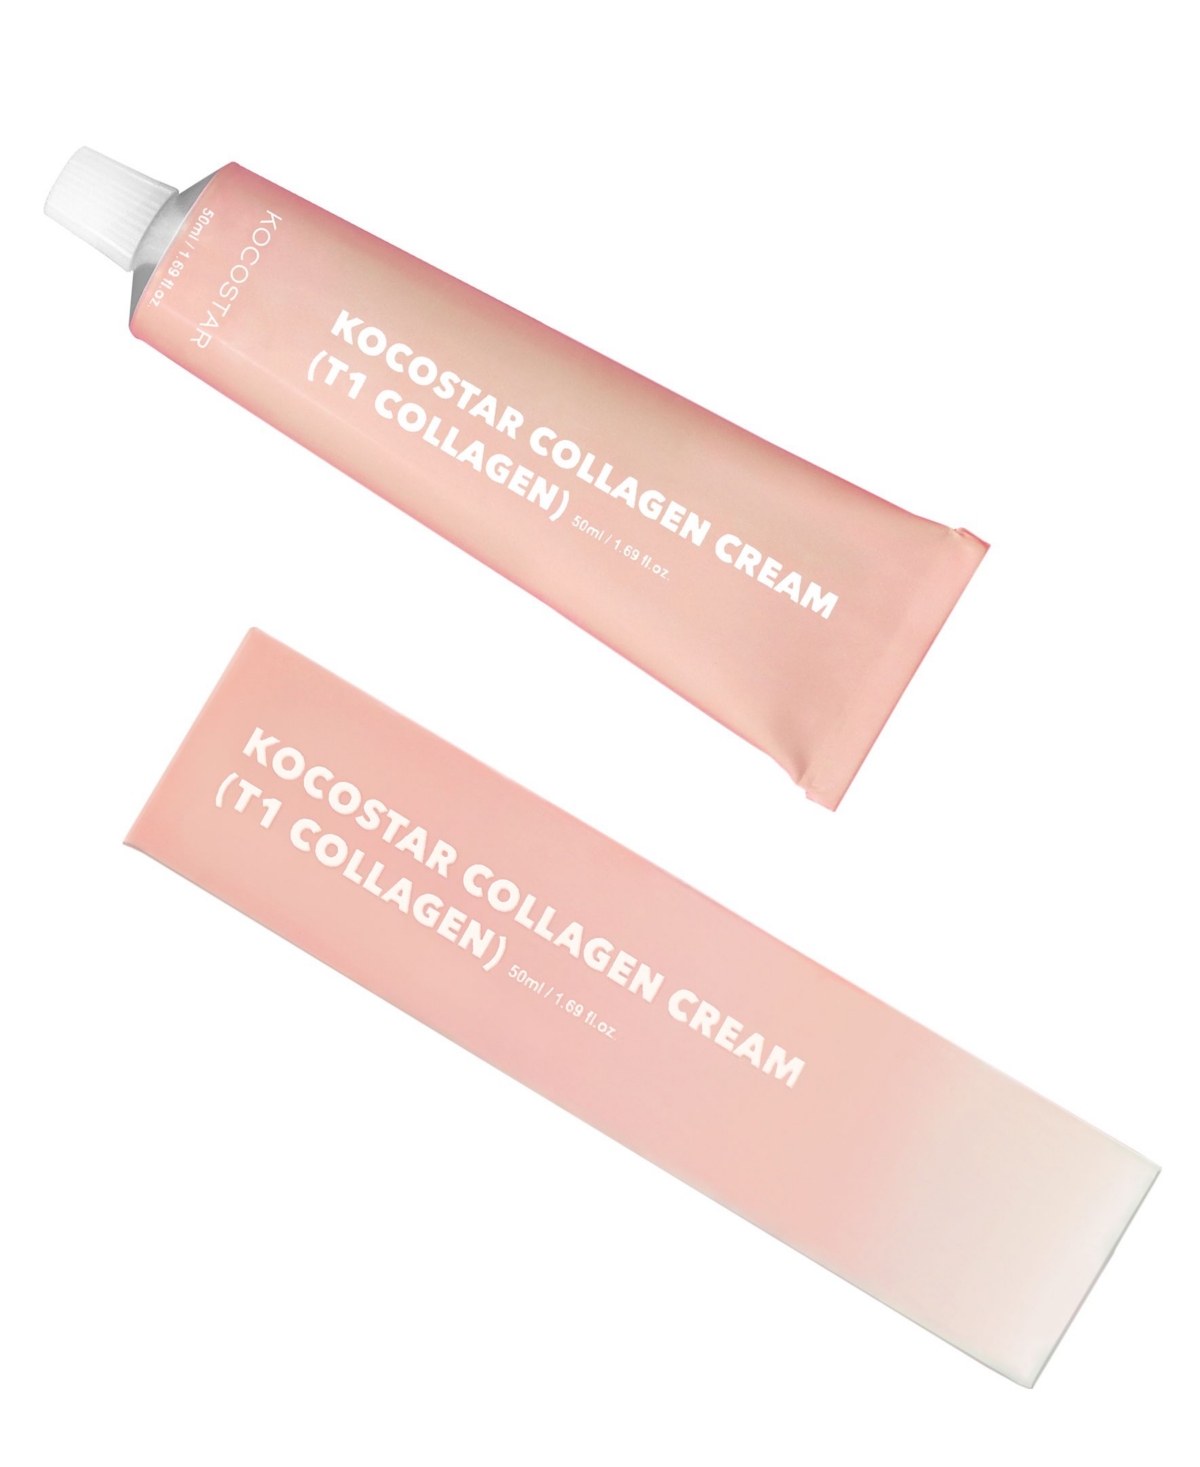 T1 Collagen Cream, 1.69 oz.